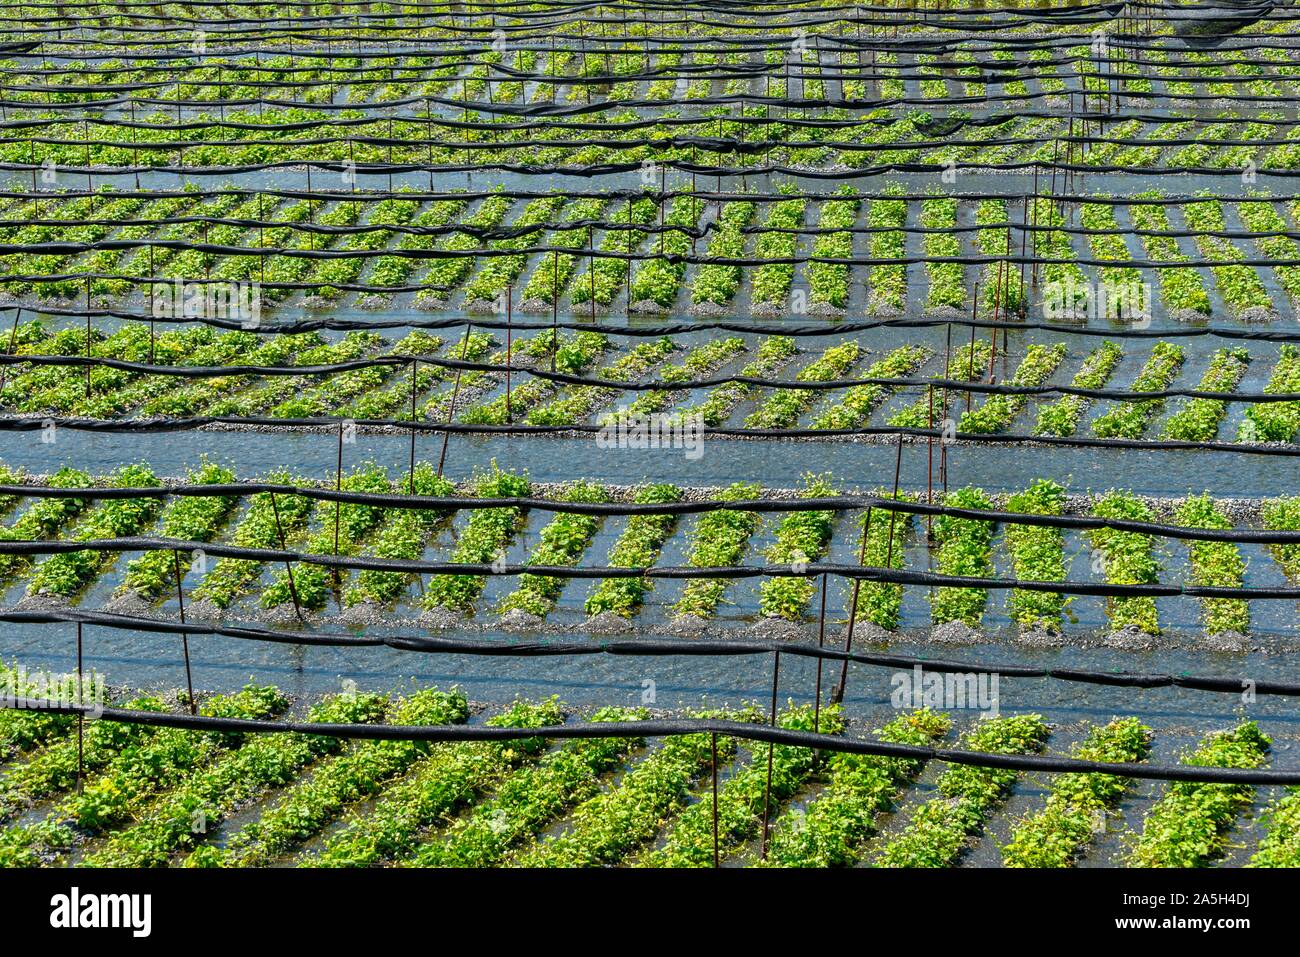 Rows of Wasabi plants in water, Wasabi cultivation, Daio Wasabi Farm, Nagano, Japan Stock Photo